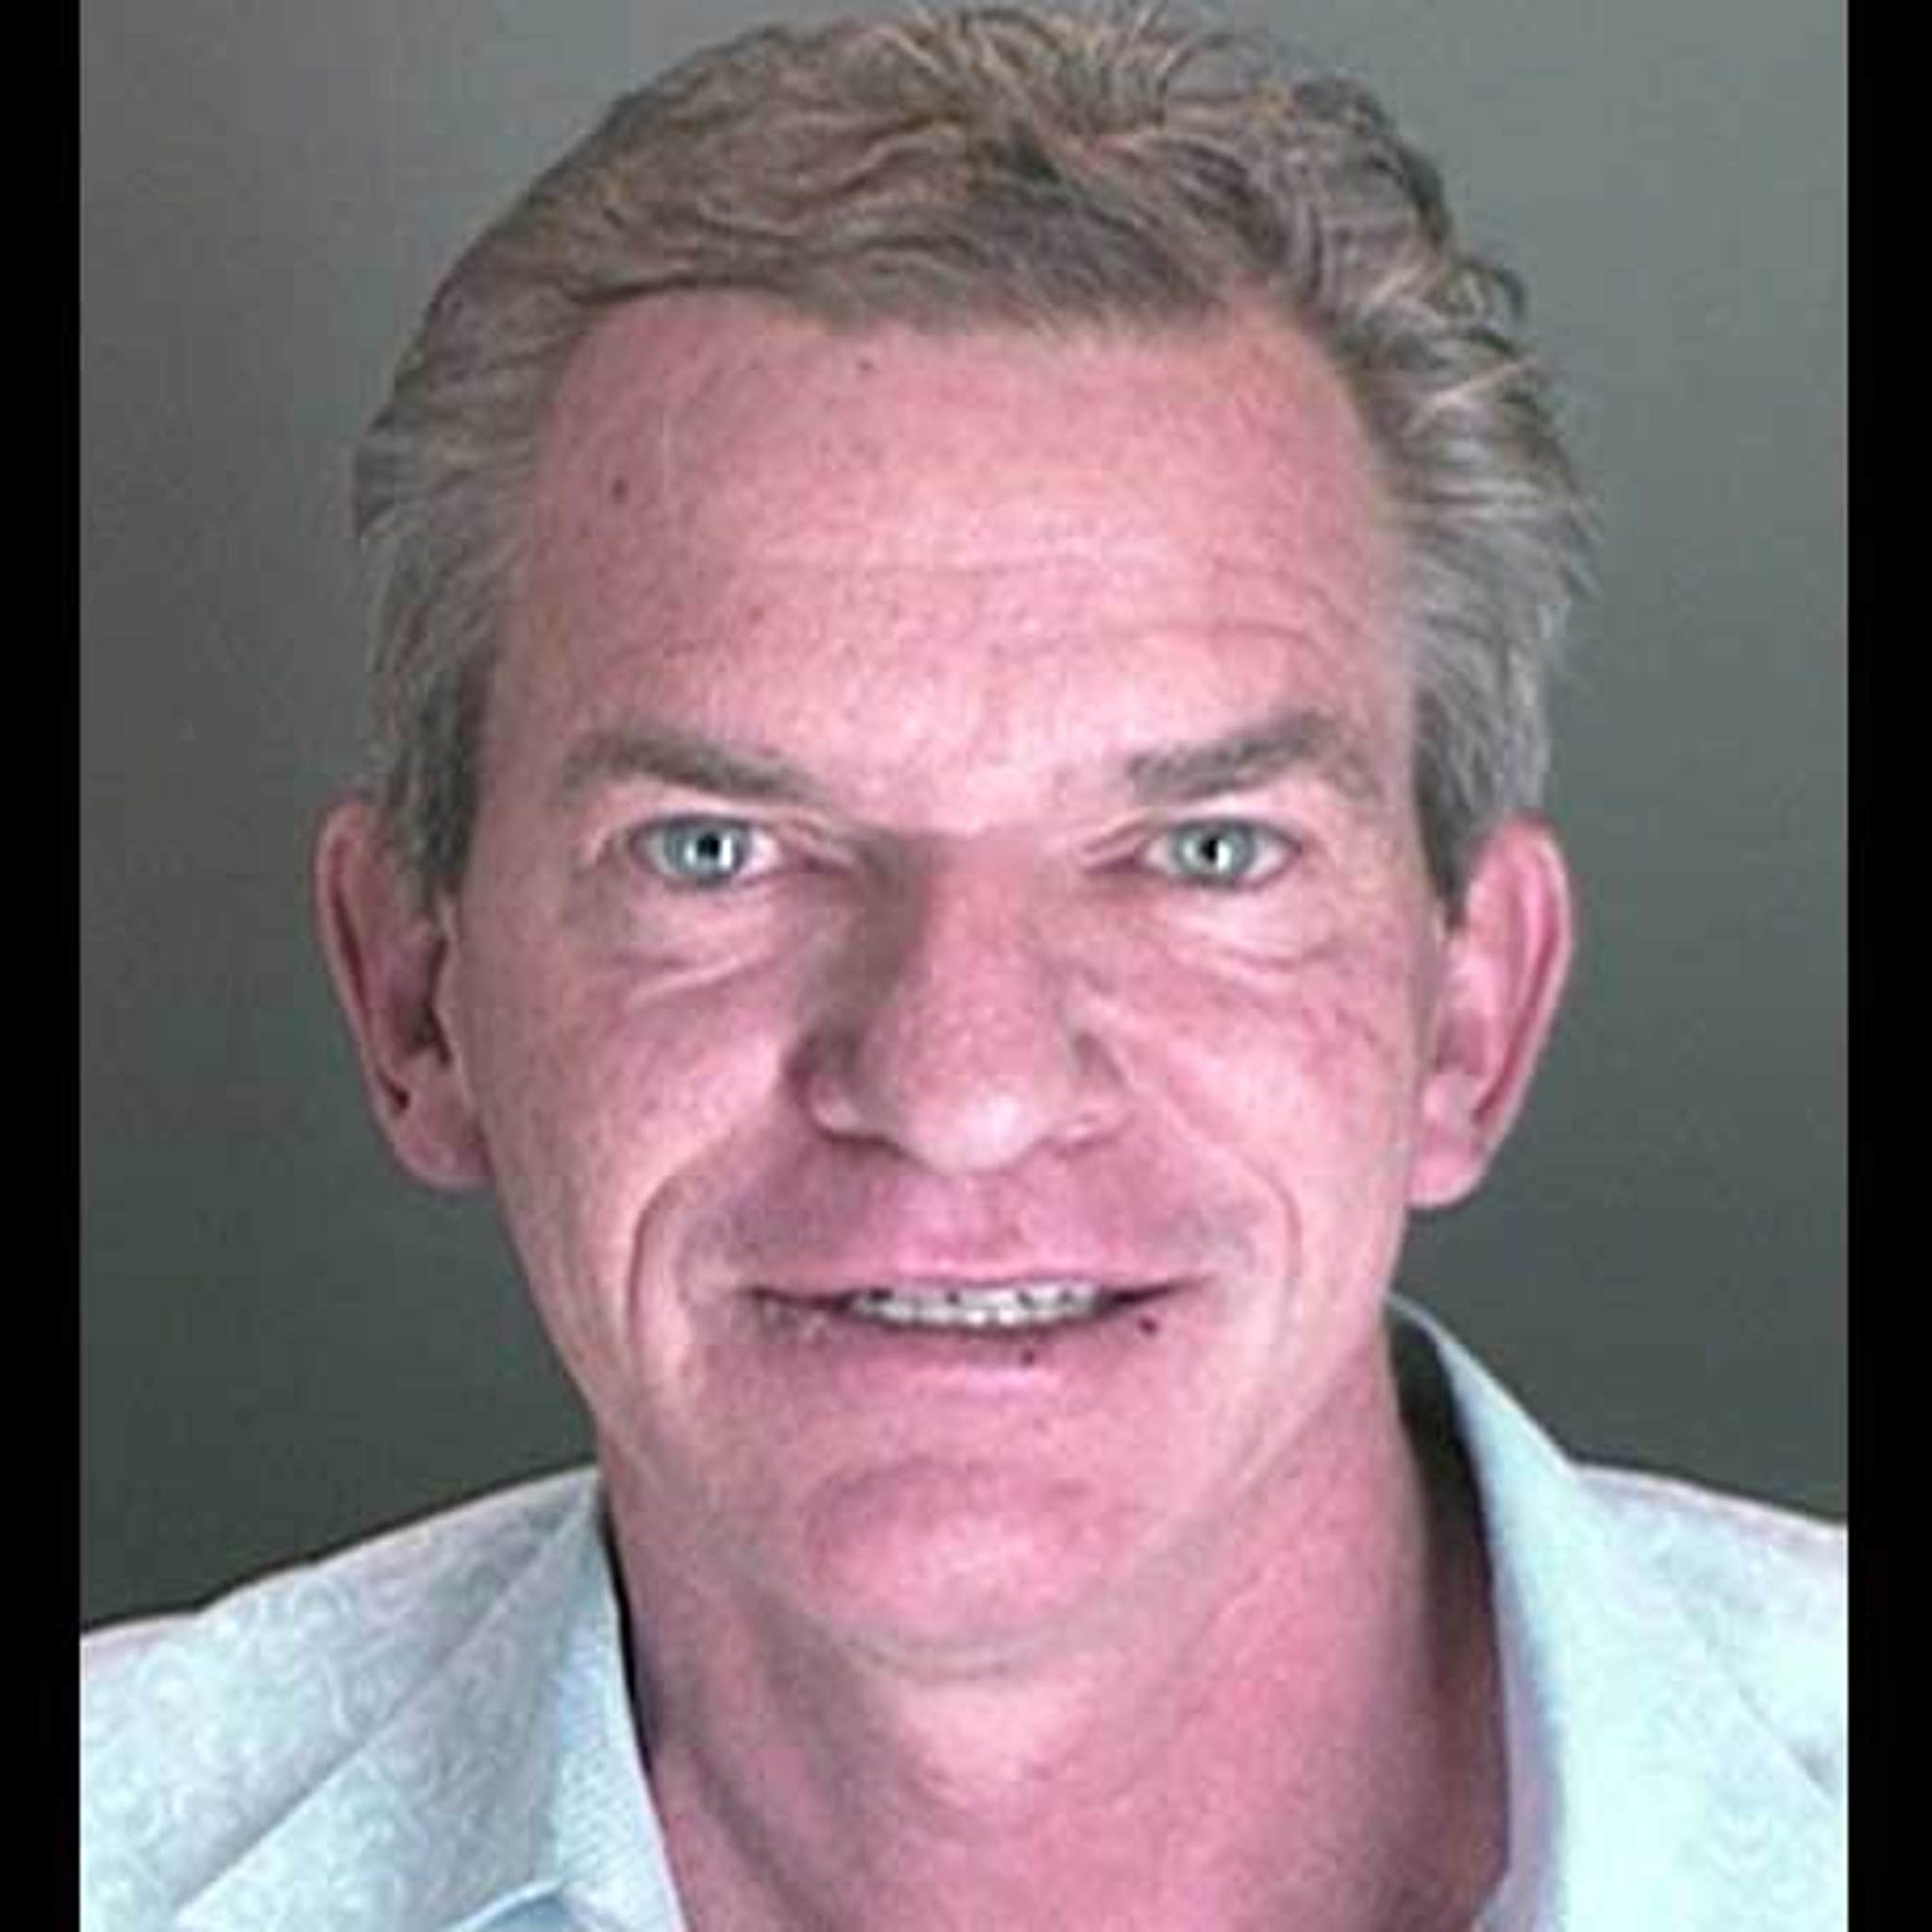 Crocs Founder George Boedecker in Crazy DUI Arrest ... 'He's Drunk as Crap'